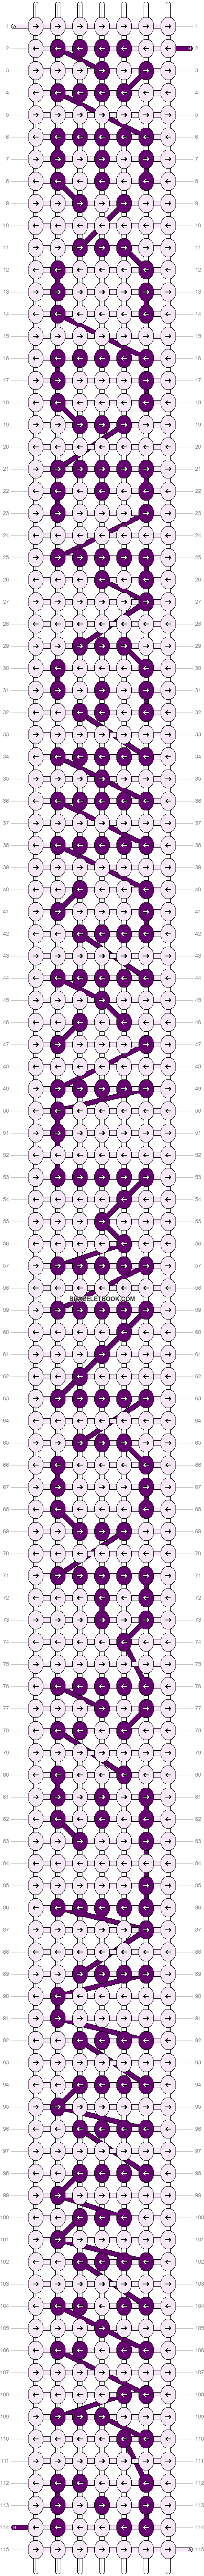 Alpha pattern #62167 variation #147455 pattern